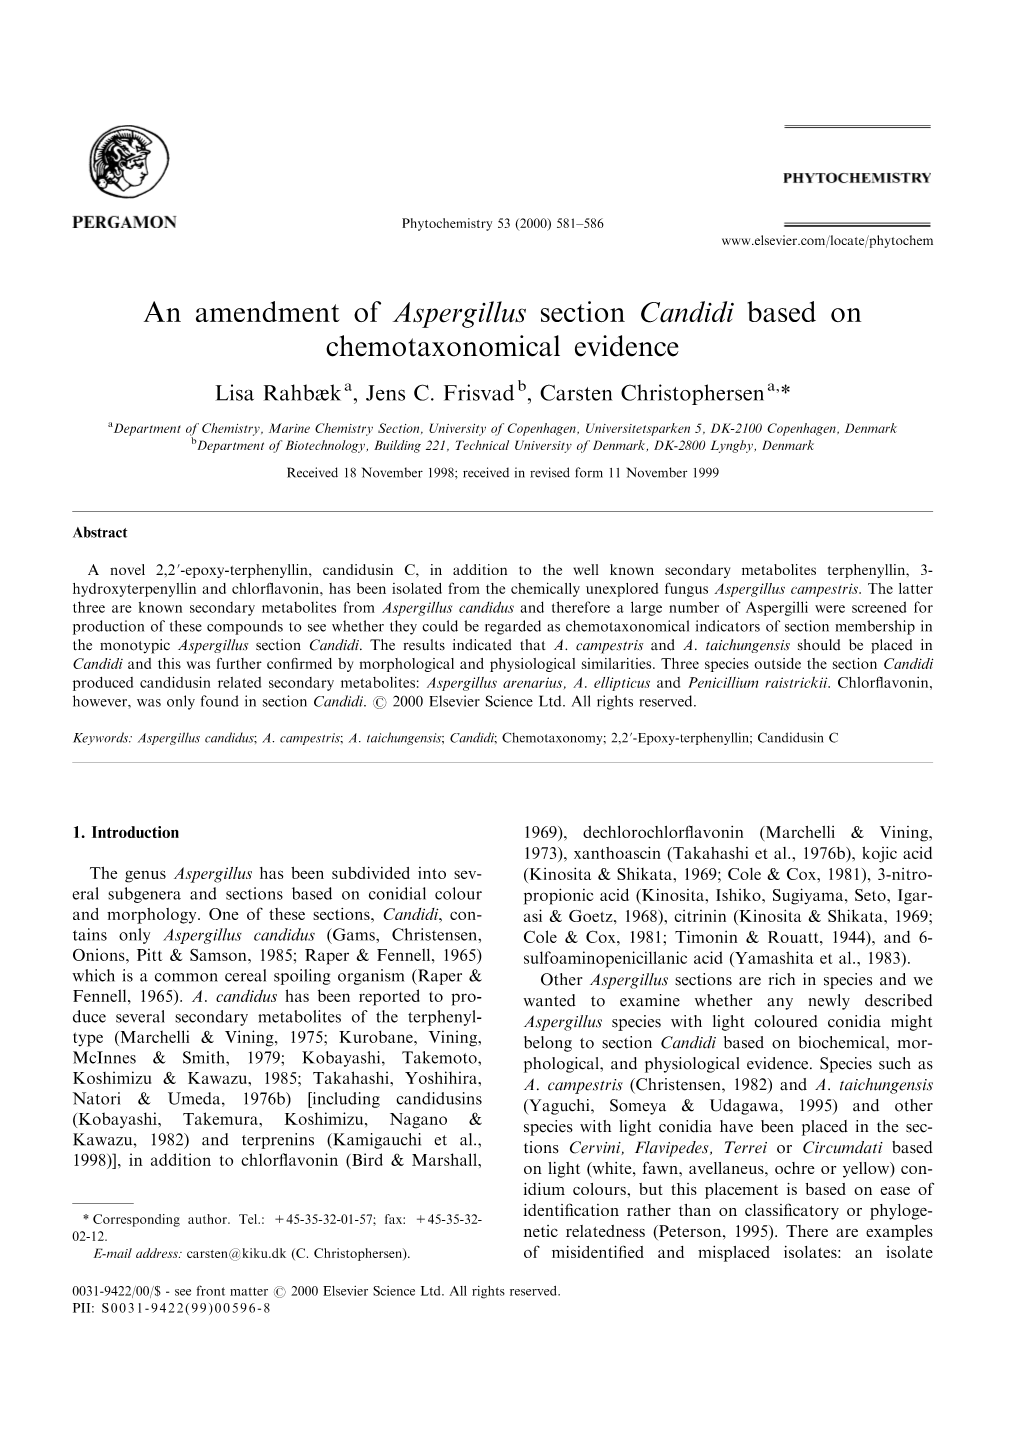 An Amendment of Aspergillus Section Candidi Based on Chemotaxonomical Evidence